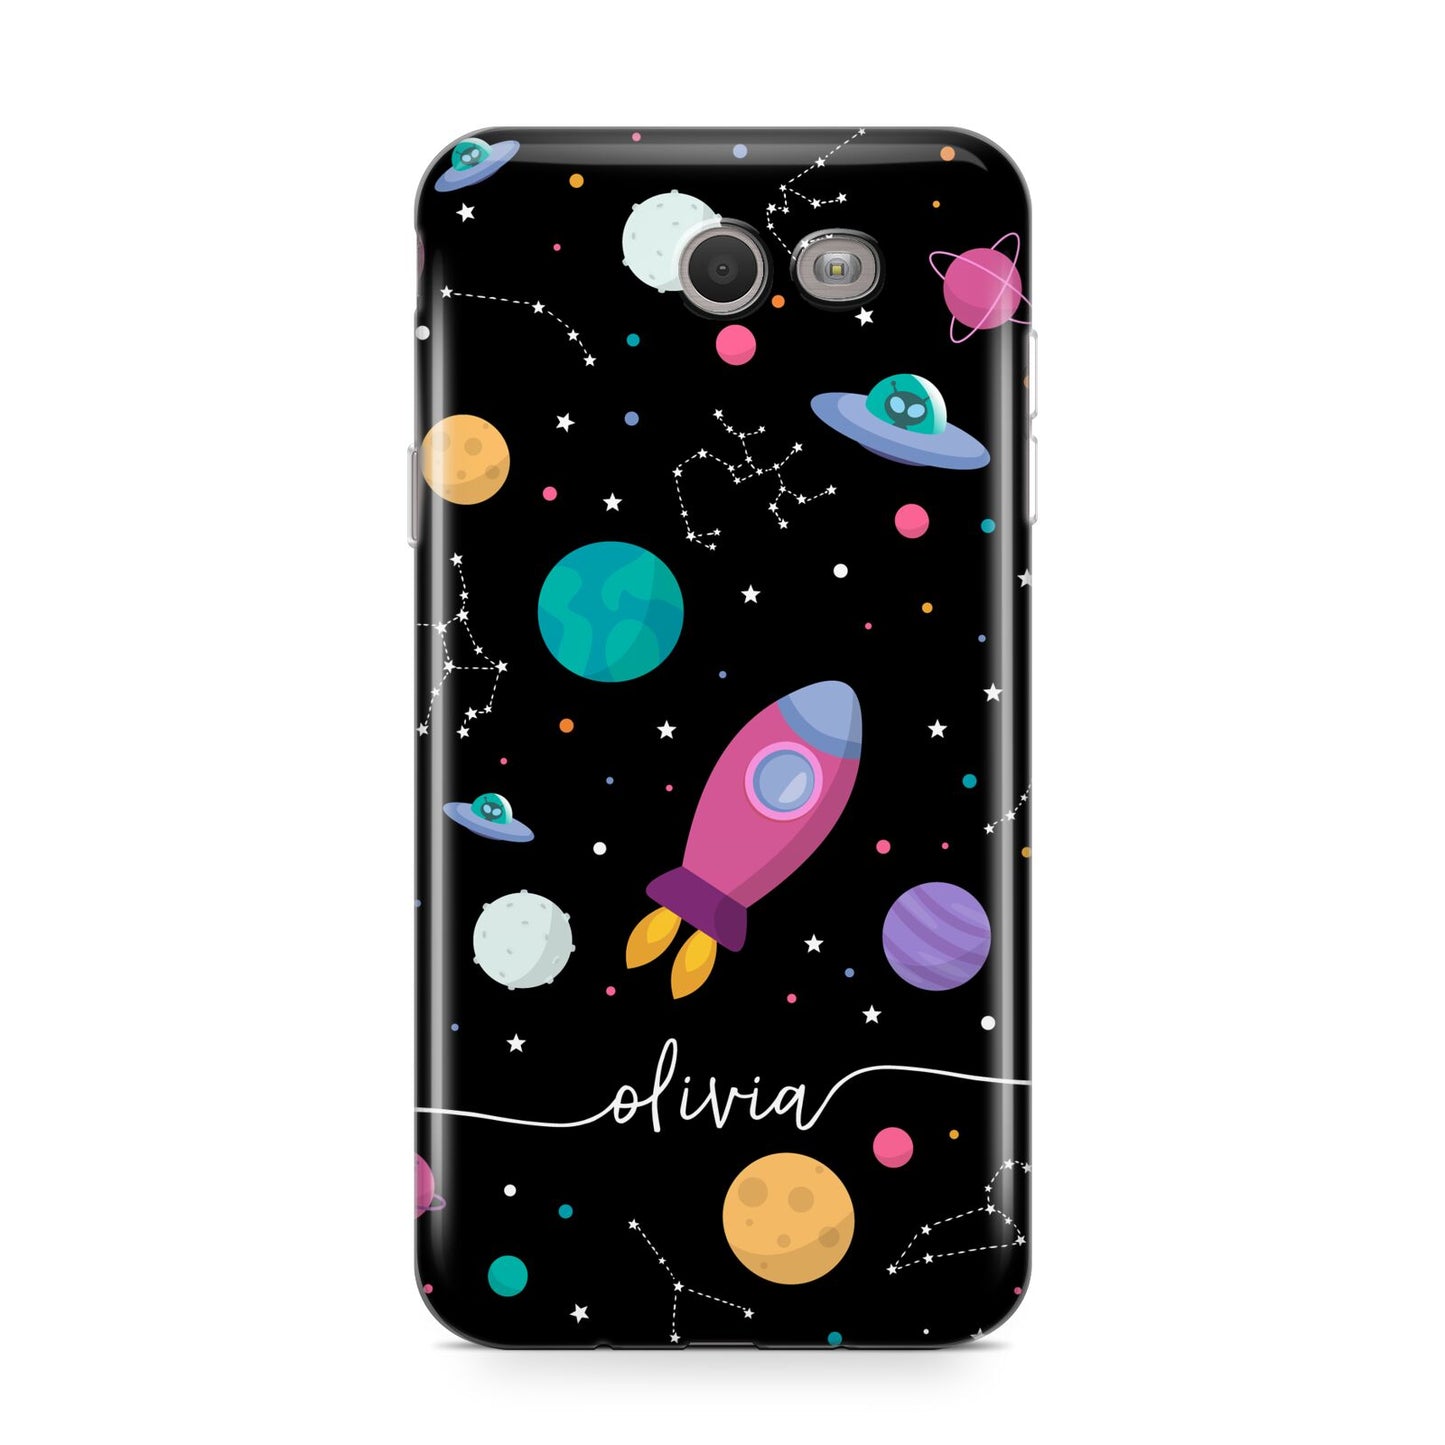 Galaxy Artwork with Name Samsung Galaxy J7 2017 Case